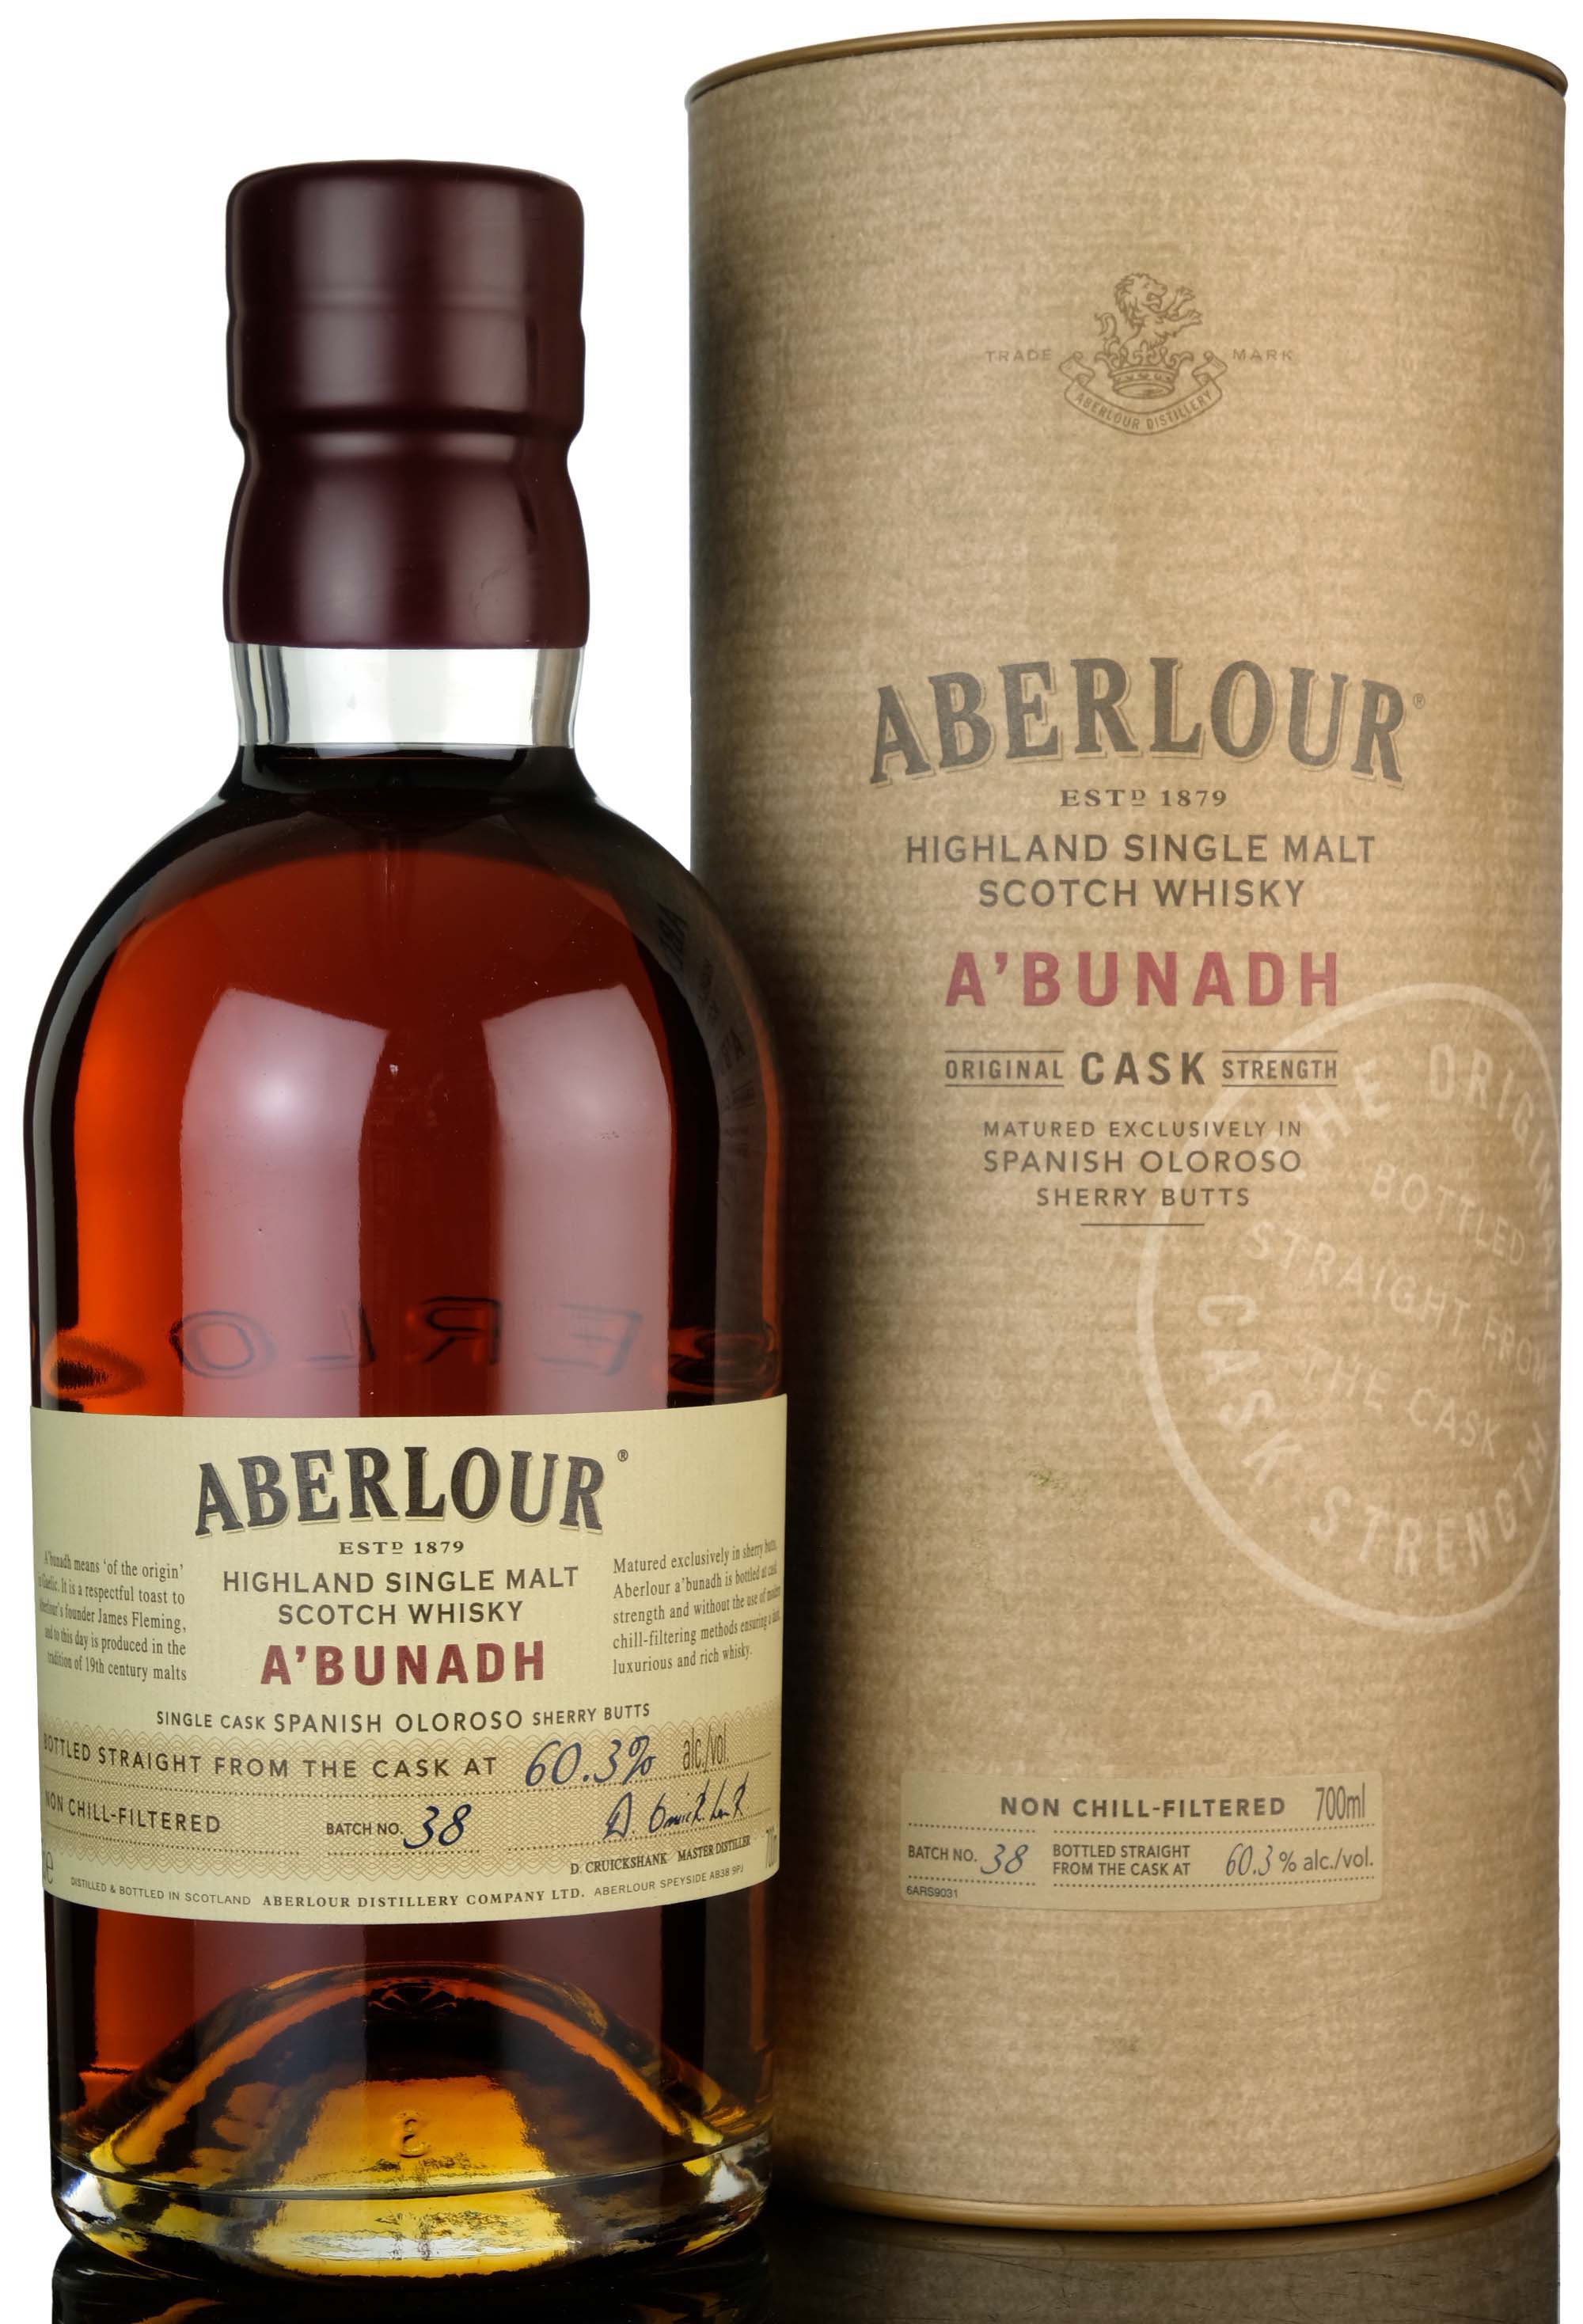 Aberlour A'bunadh - Batch 38 - 2011 Release